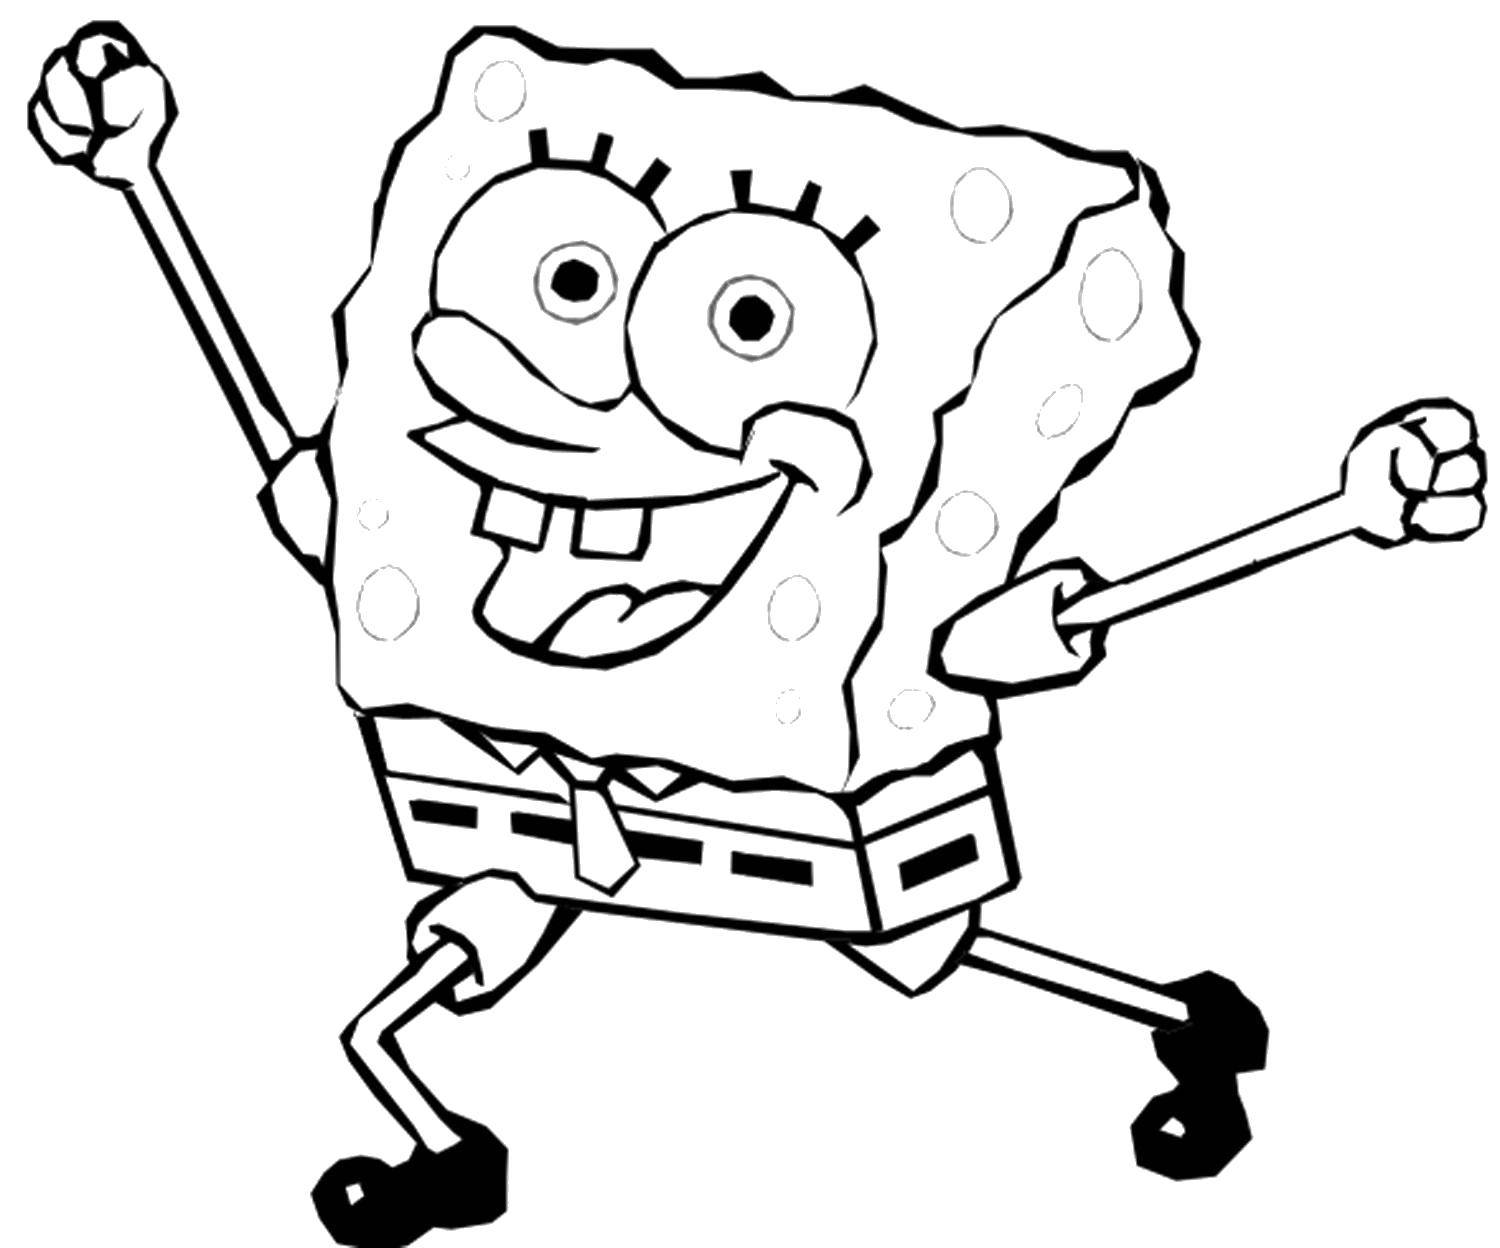 Coloring The joy of spongebob. Category Spongebob. Tags:  Cartoon character.